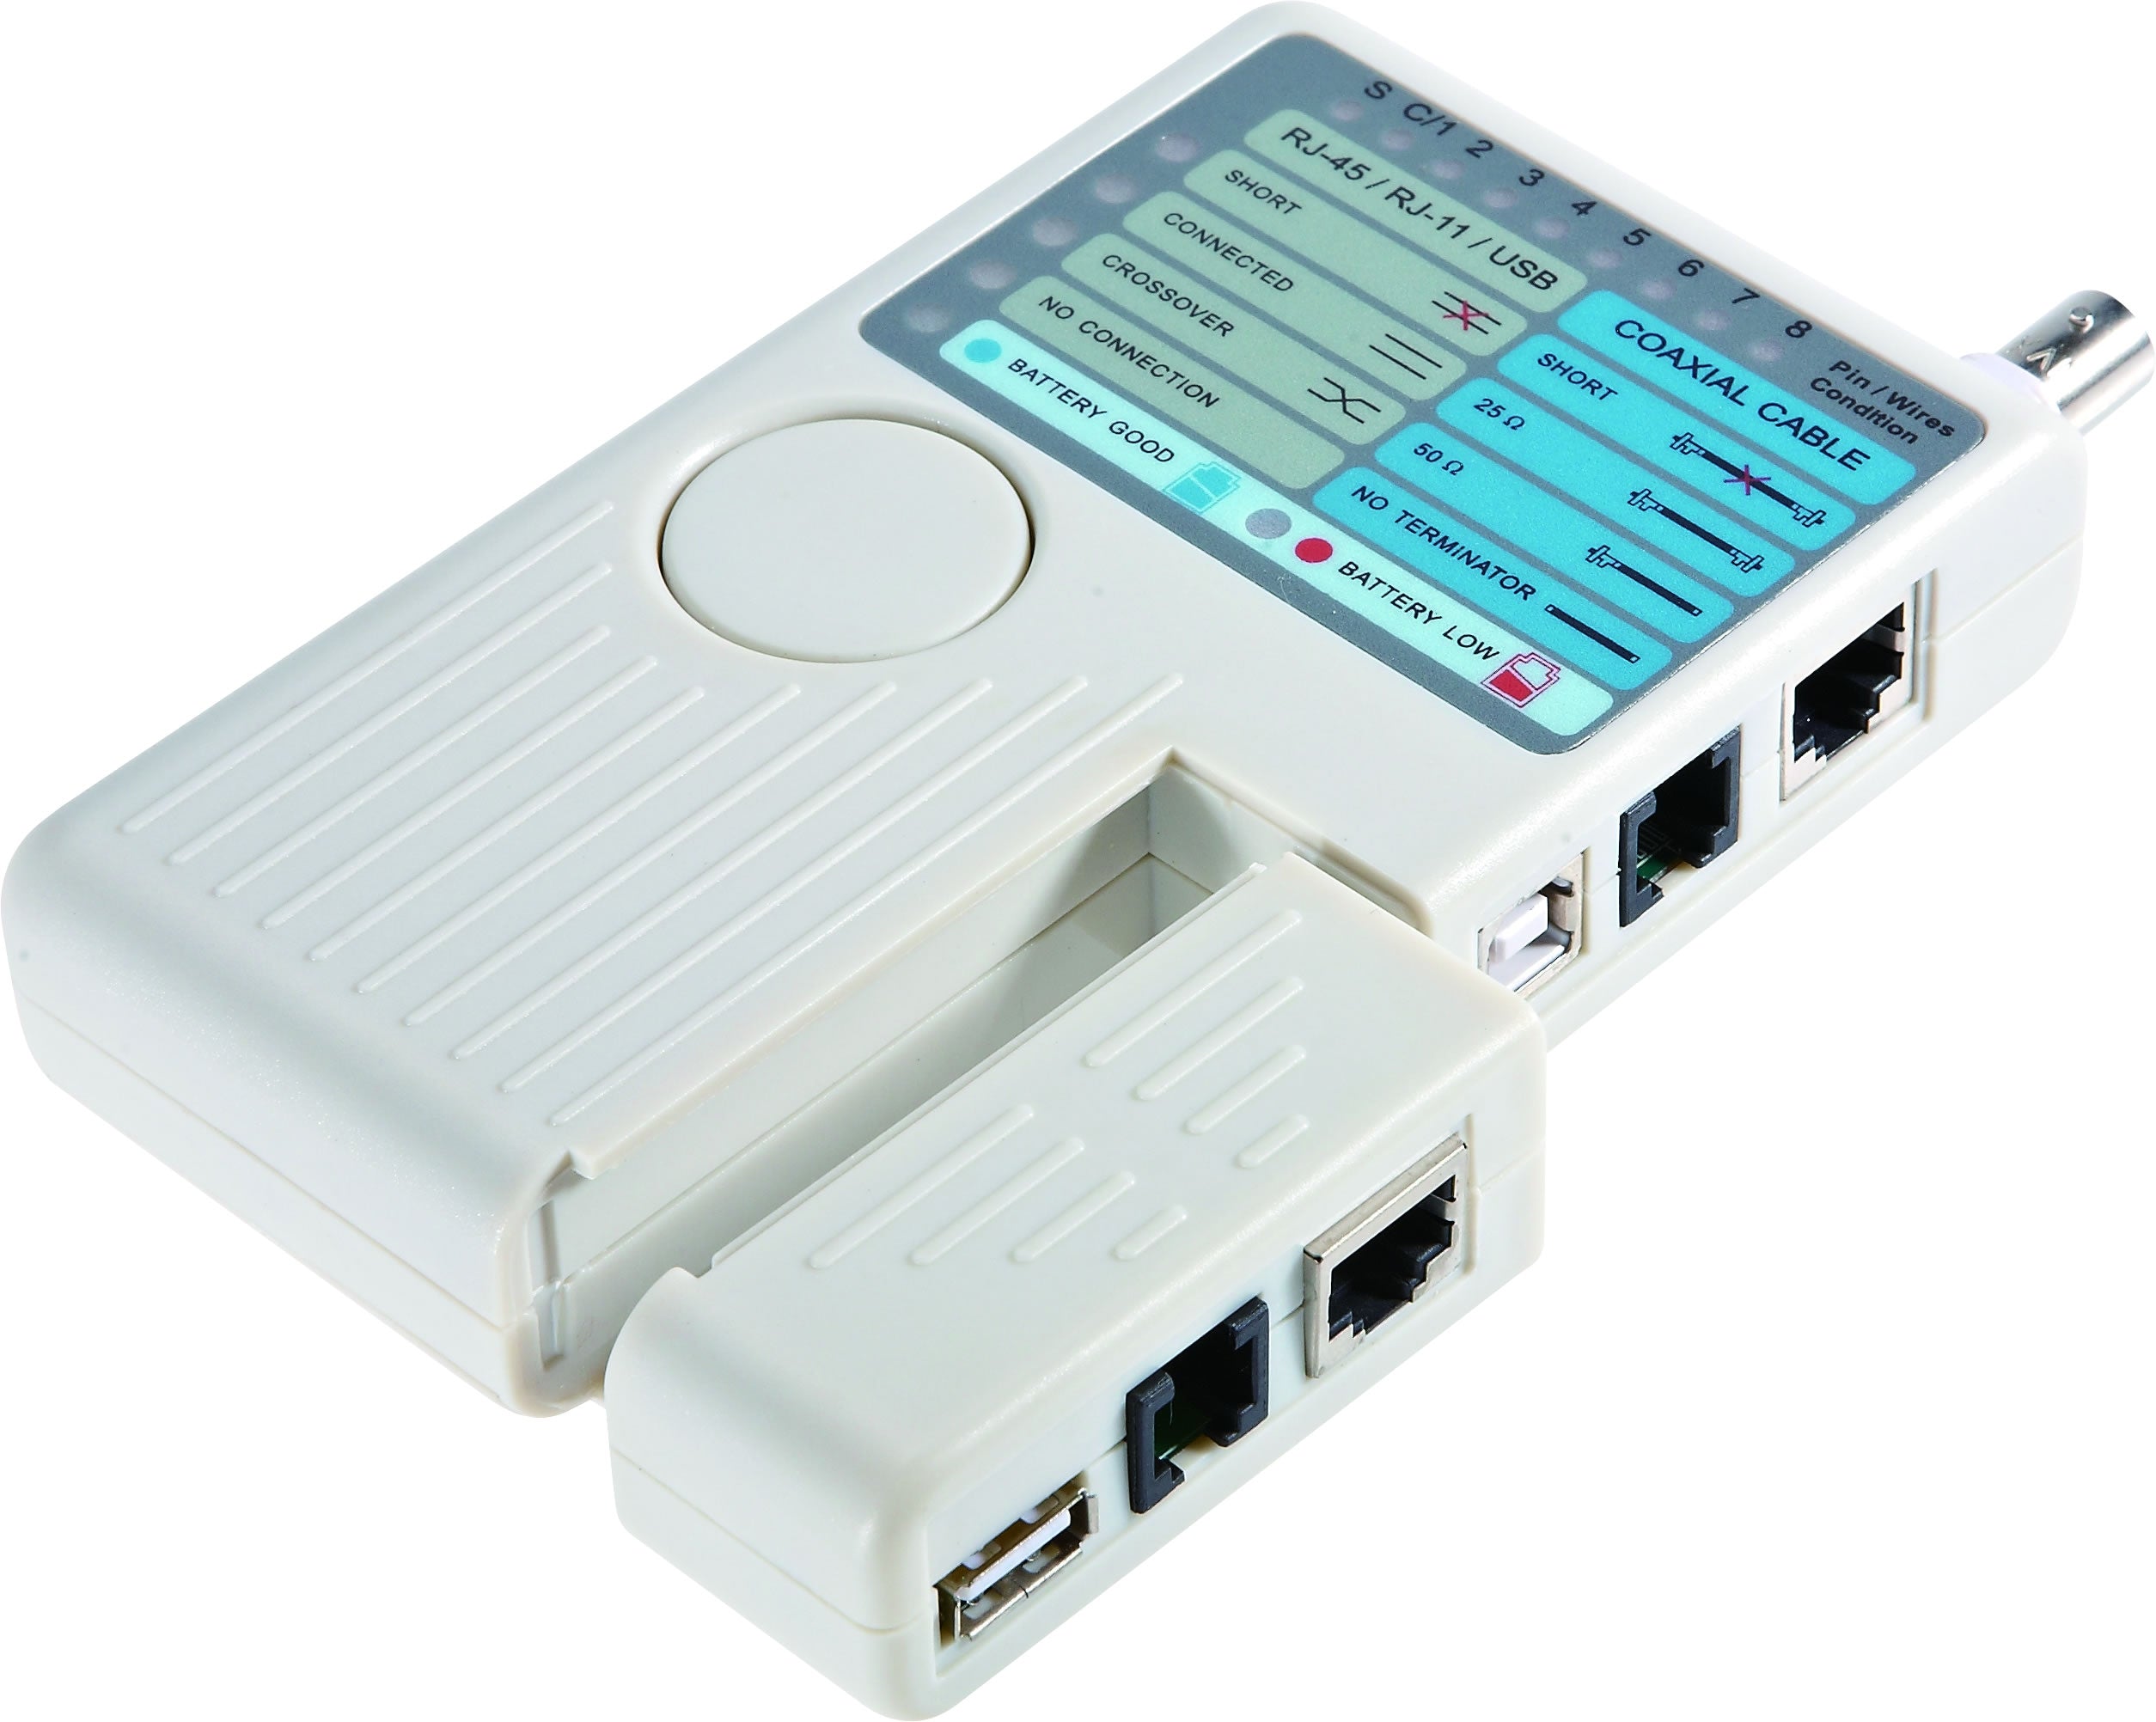 50-6201 Remote Cable Tester for RJ11 / RJ45 / USB / BNC